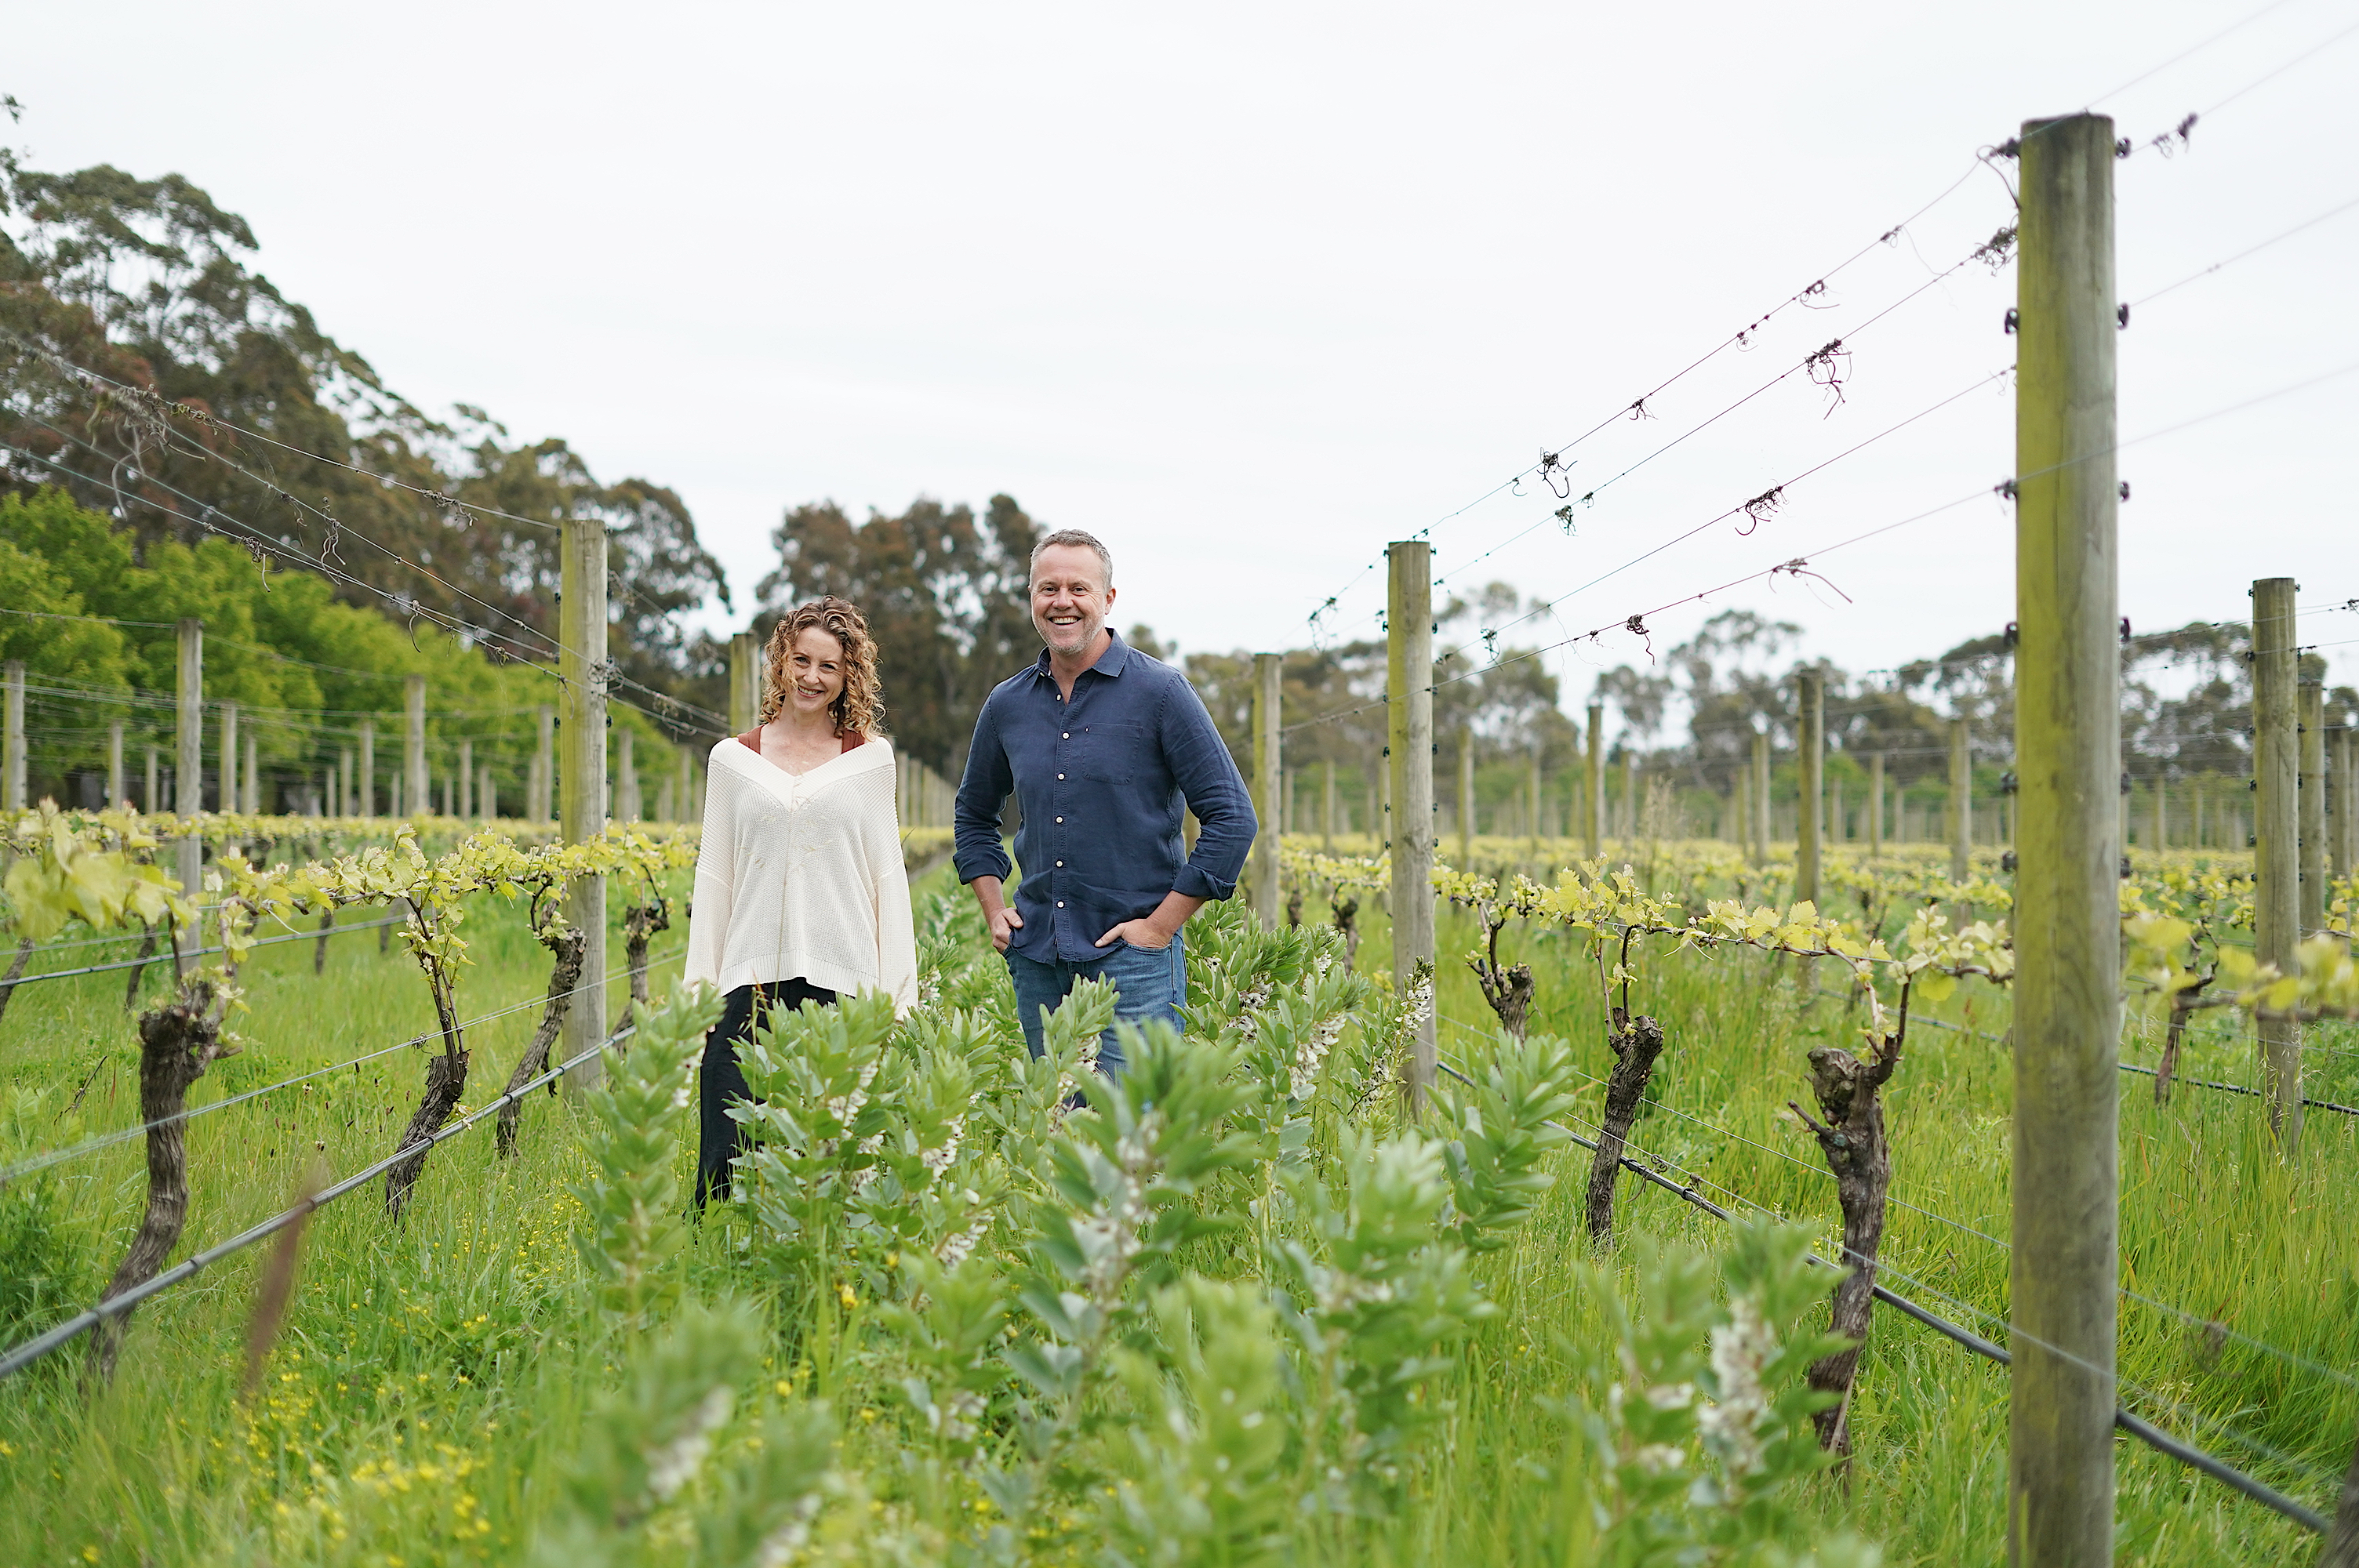 Man and woman walking in vineyard